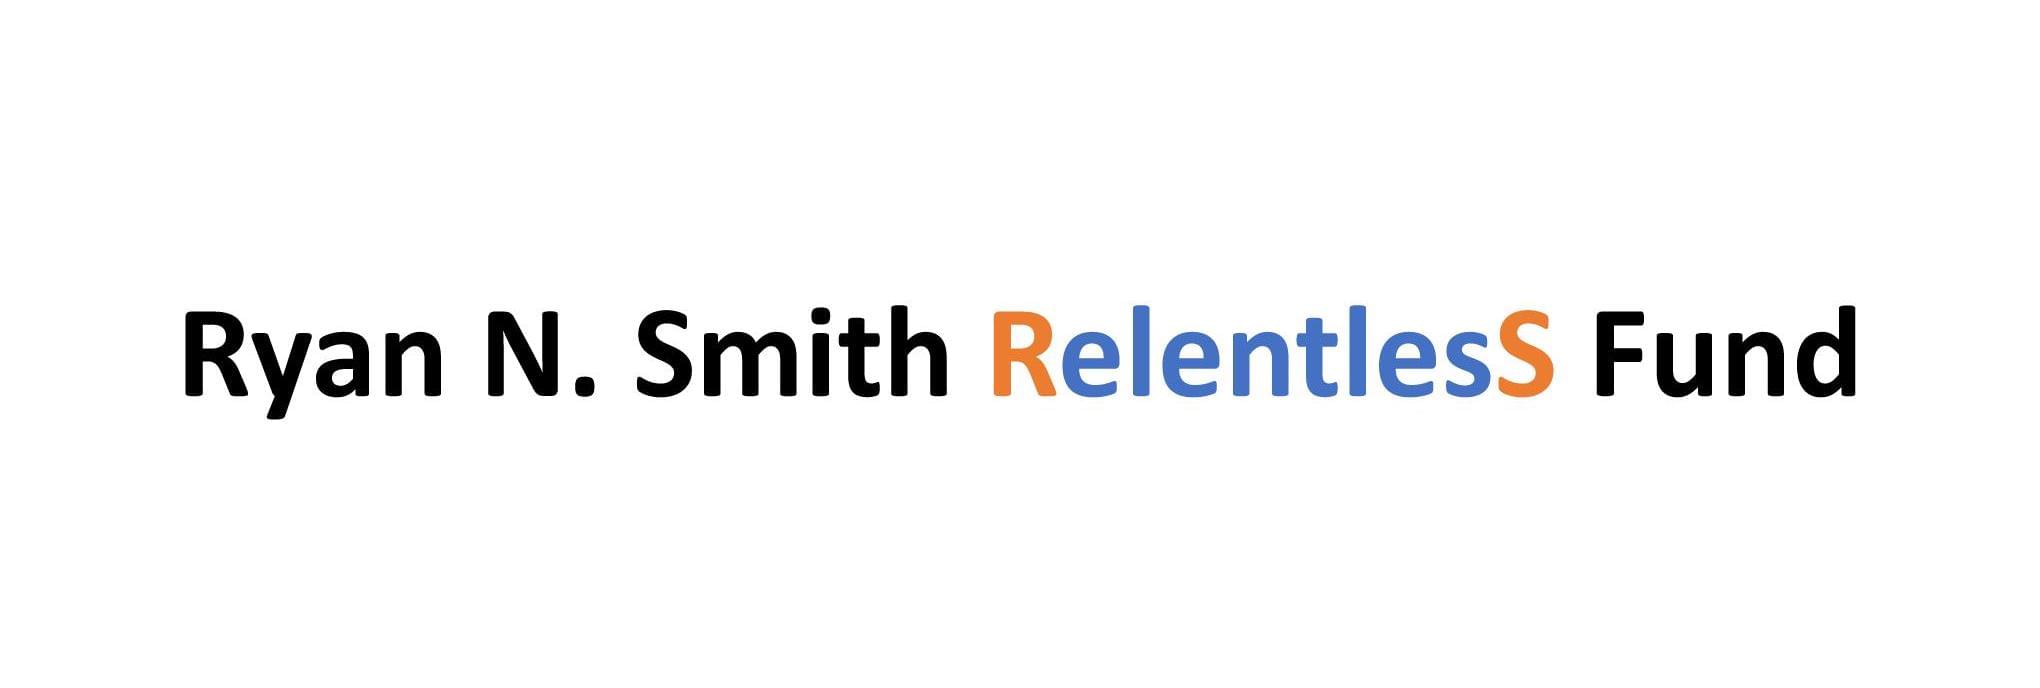 Ryan N. Smith Relentless Fund